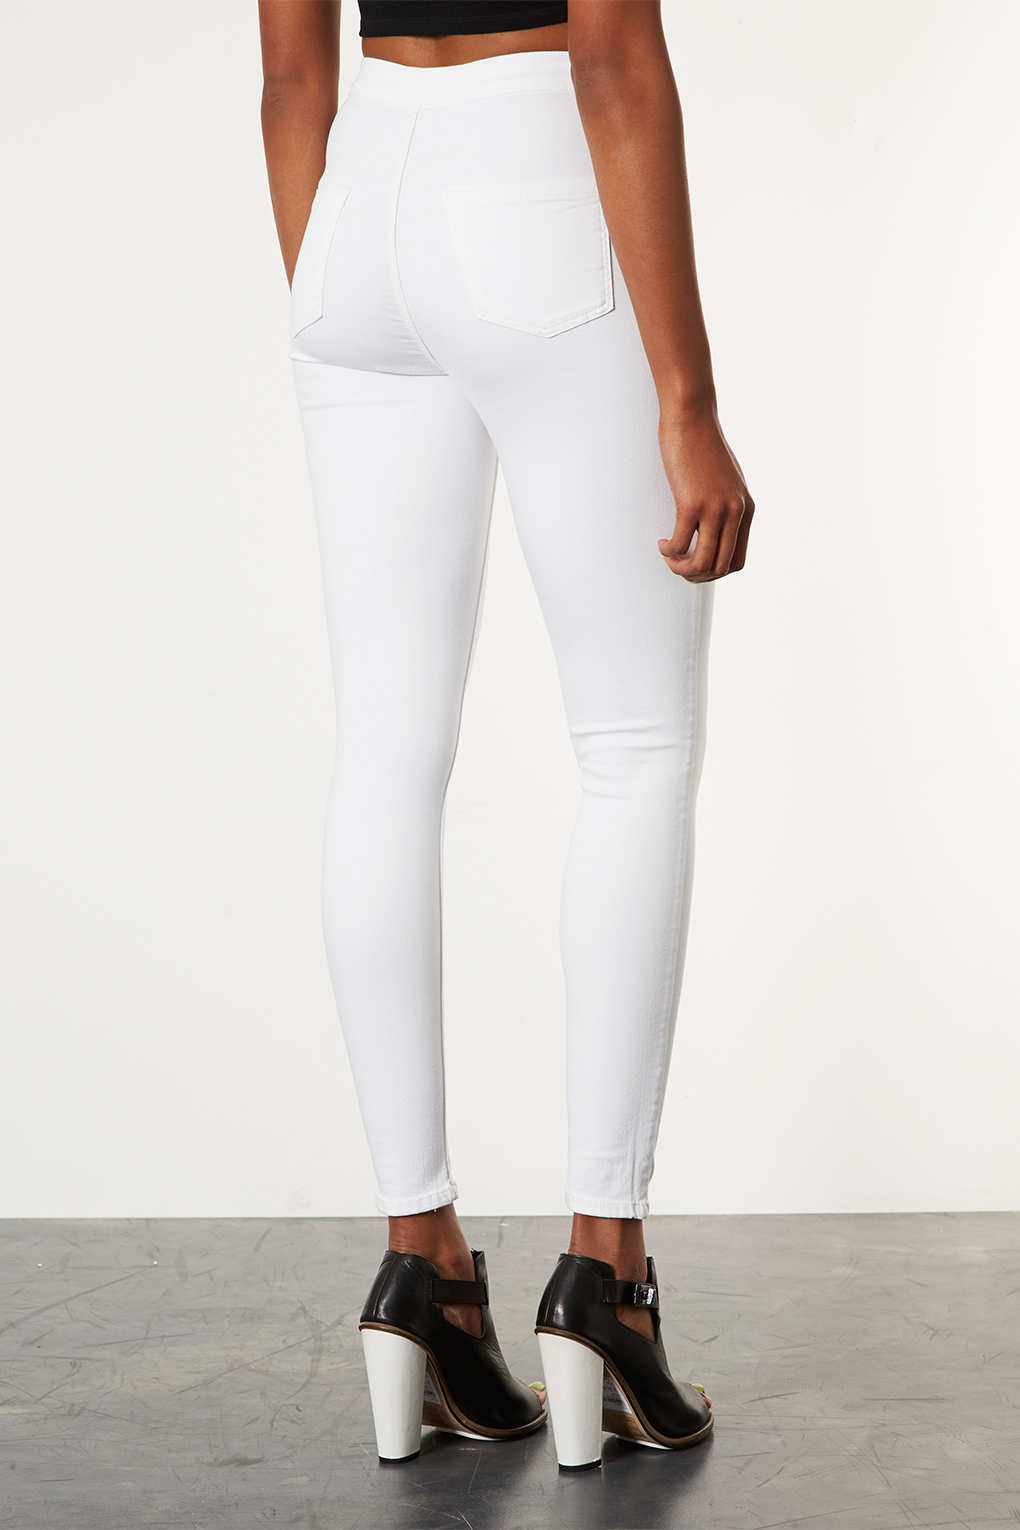 topshop white joni jeans